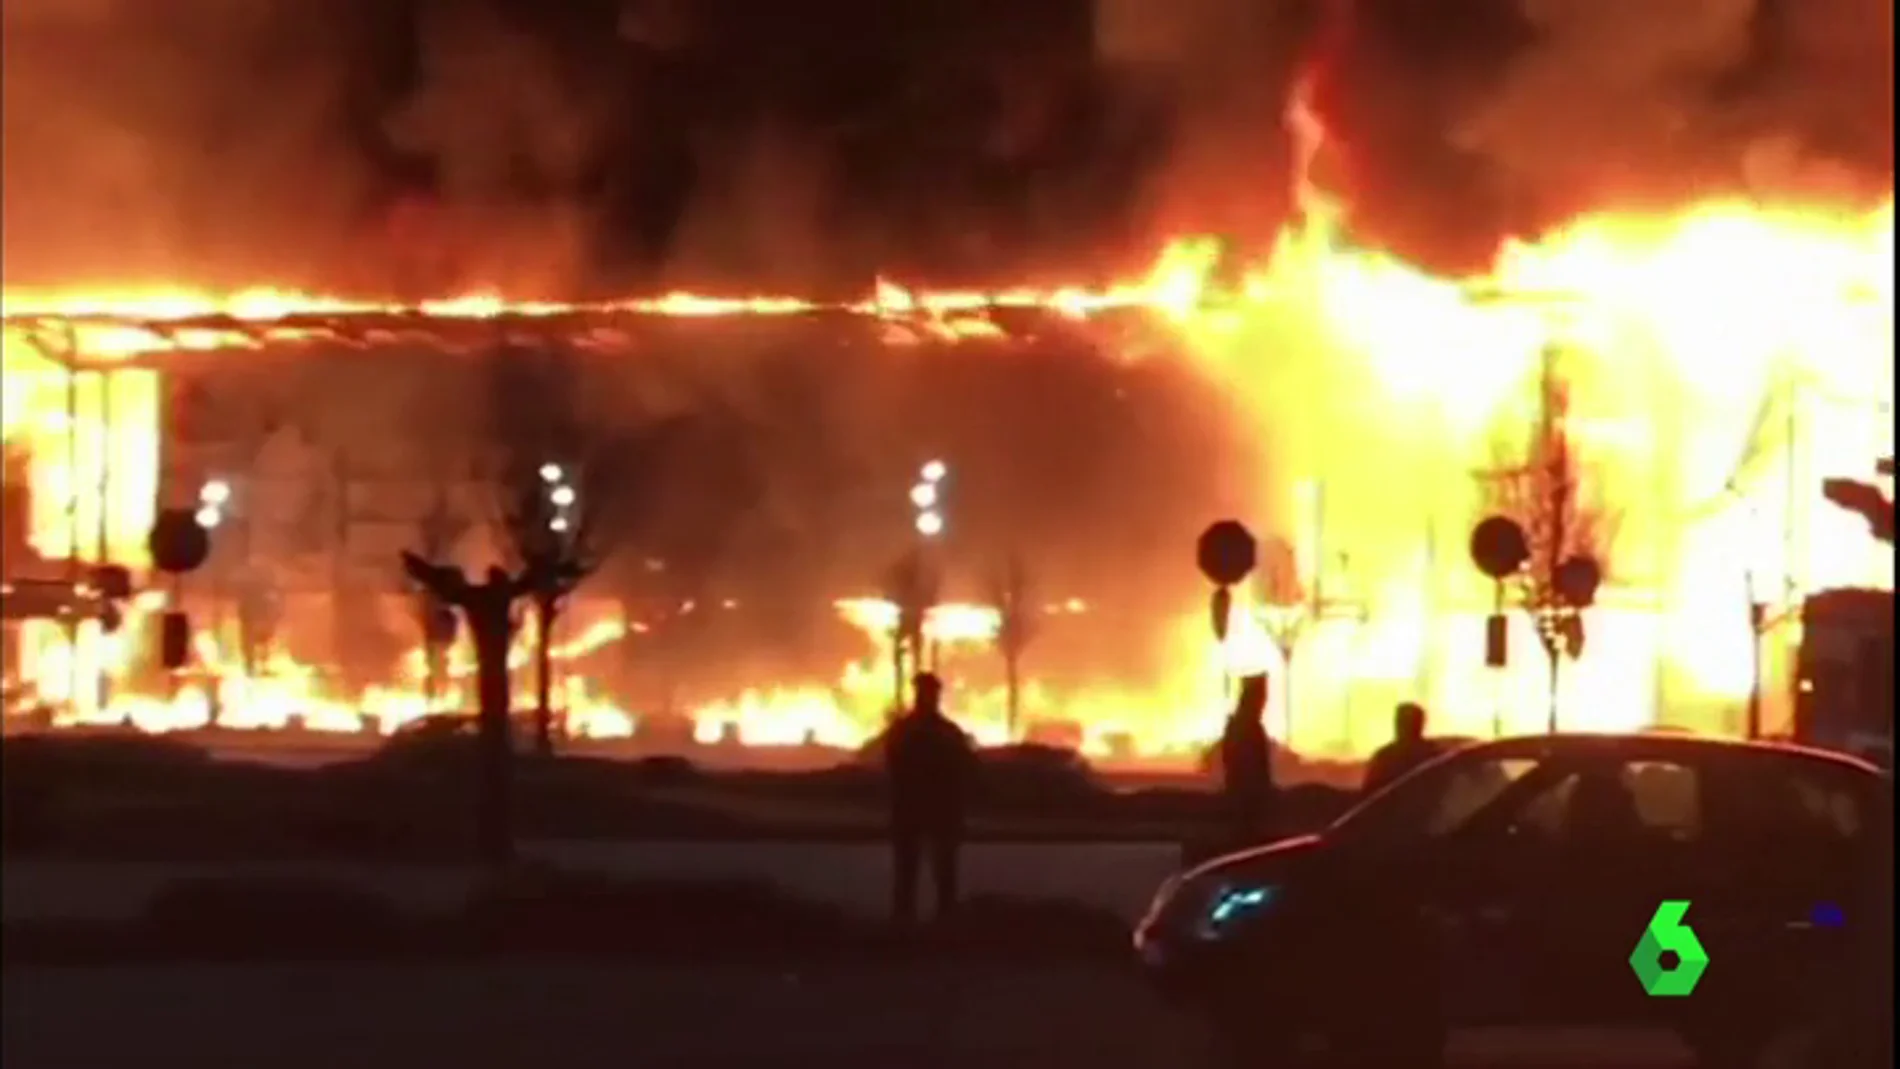 Espectacular incendio sin heridos en un centro comercial en Italia 